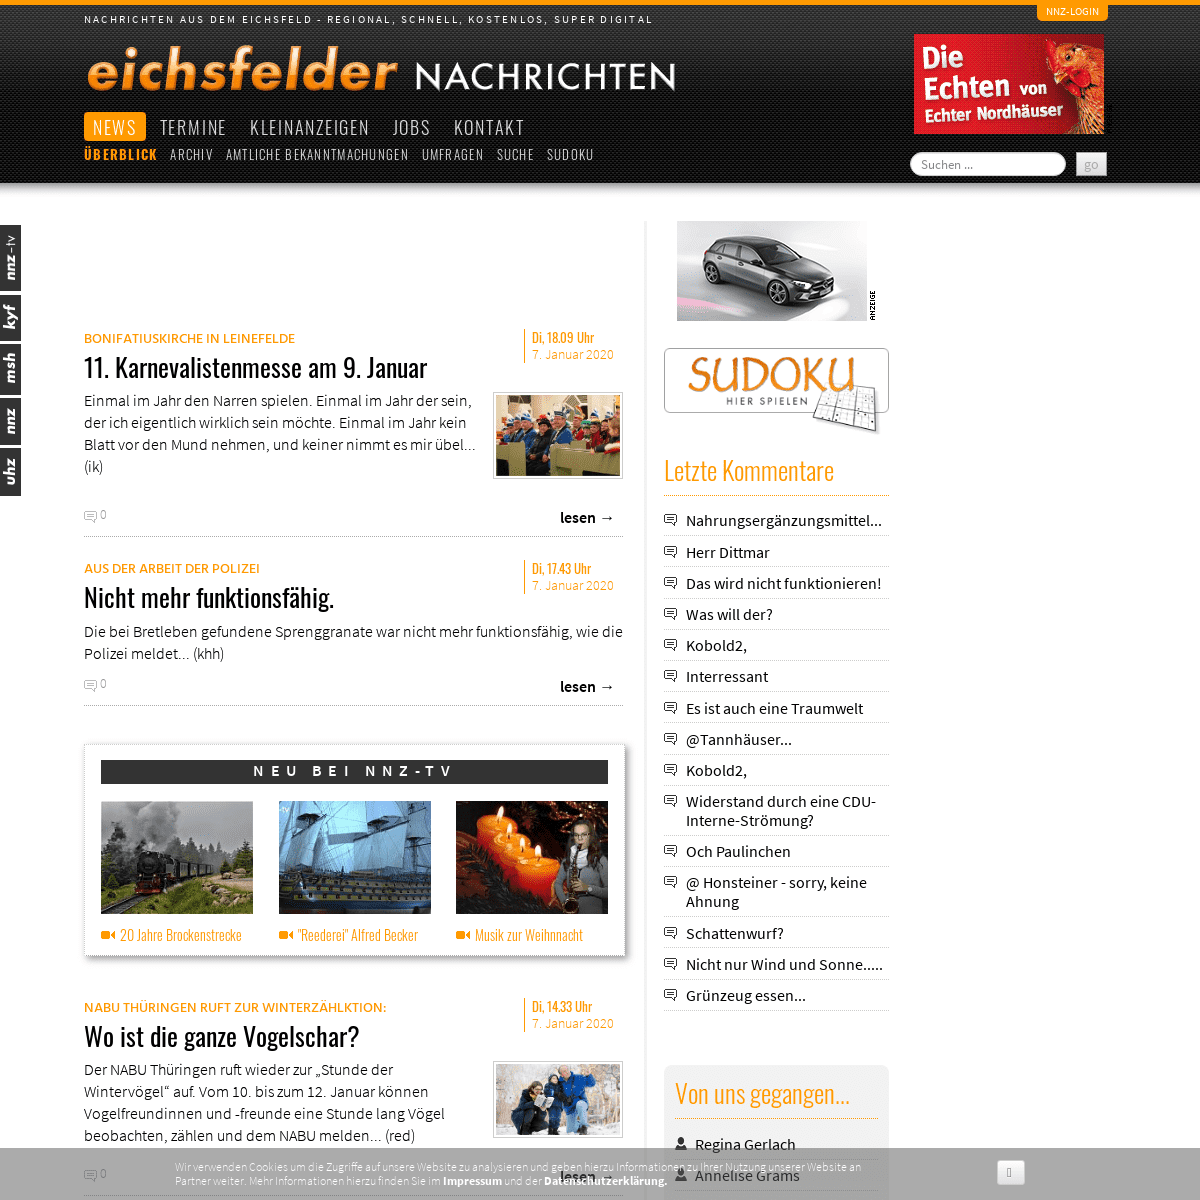 A complete backup of eichsfelder-nachrichten.de